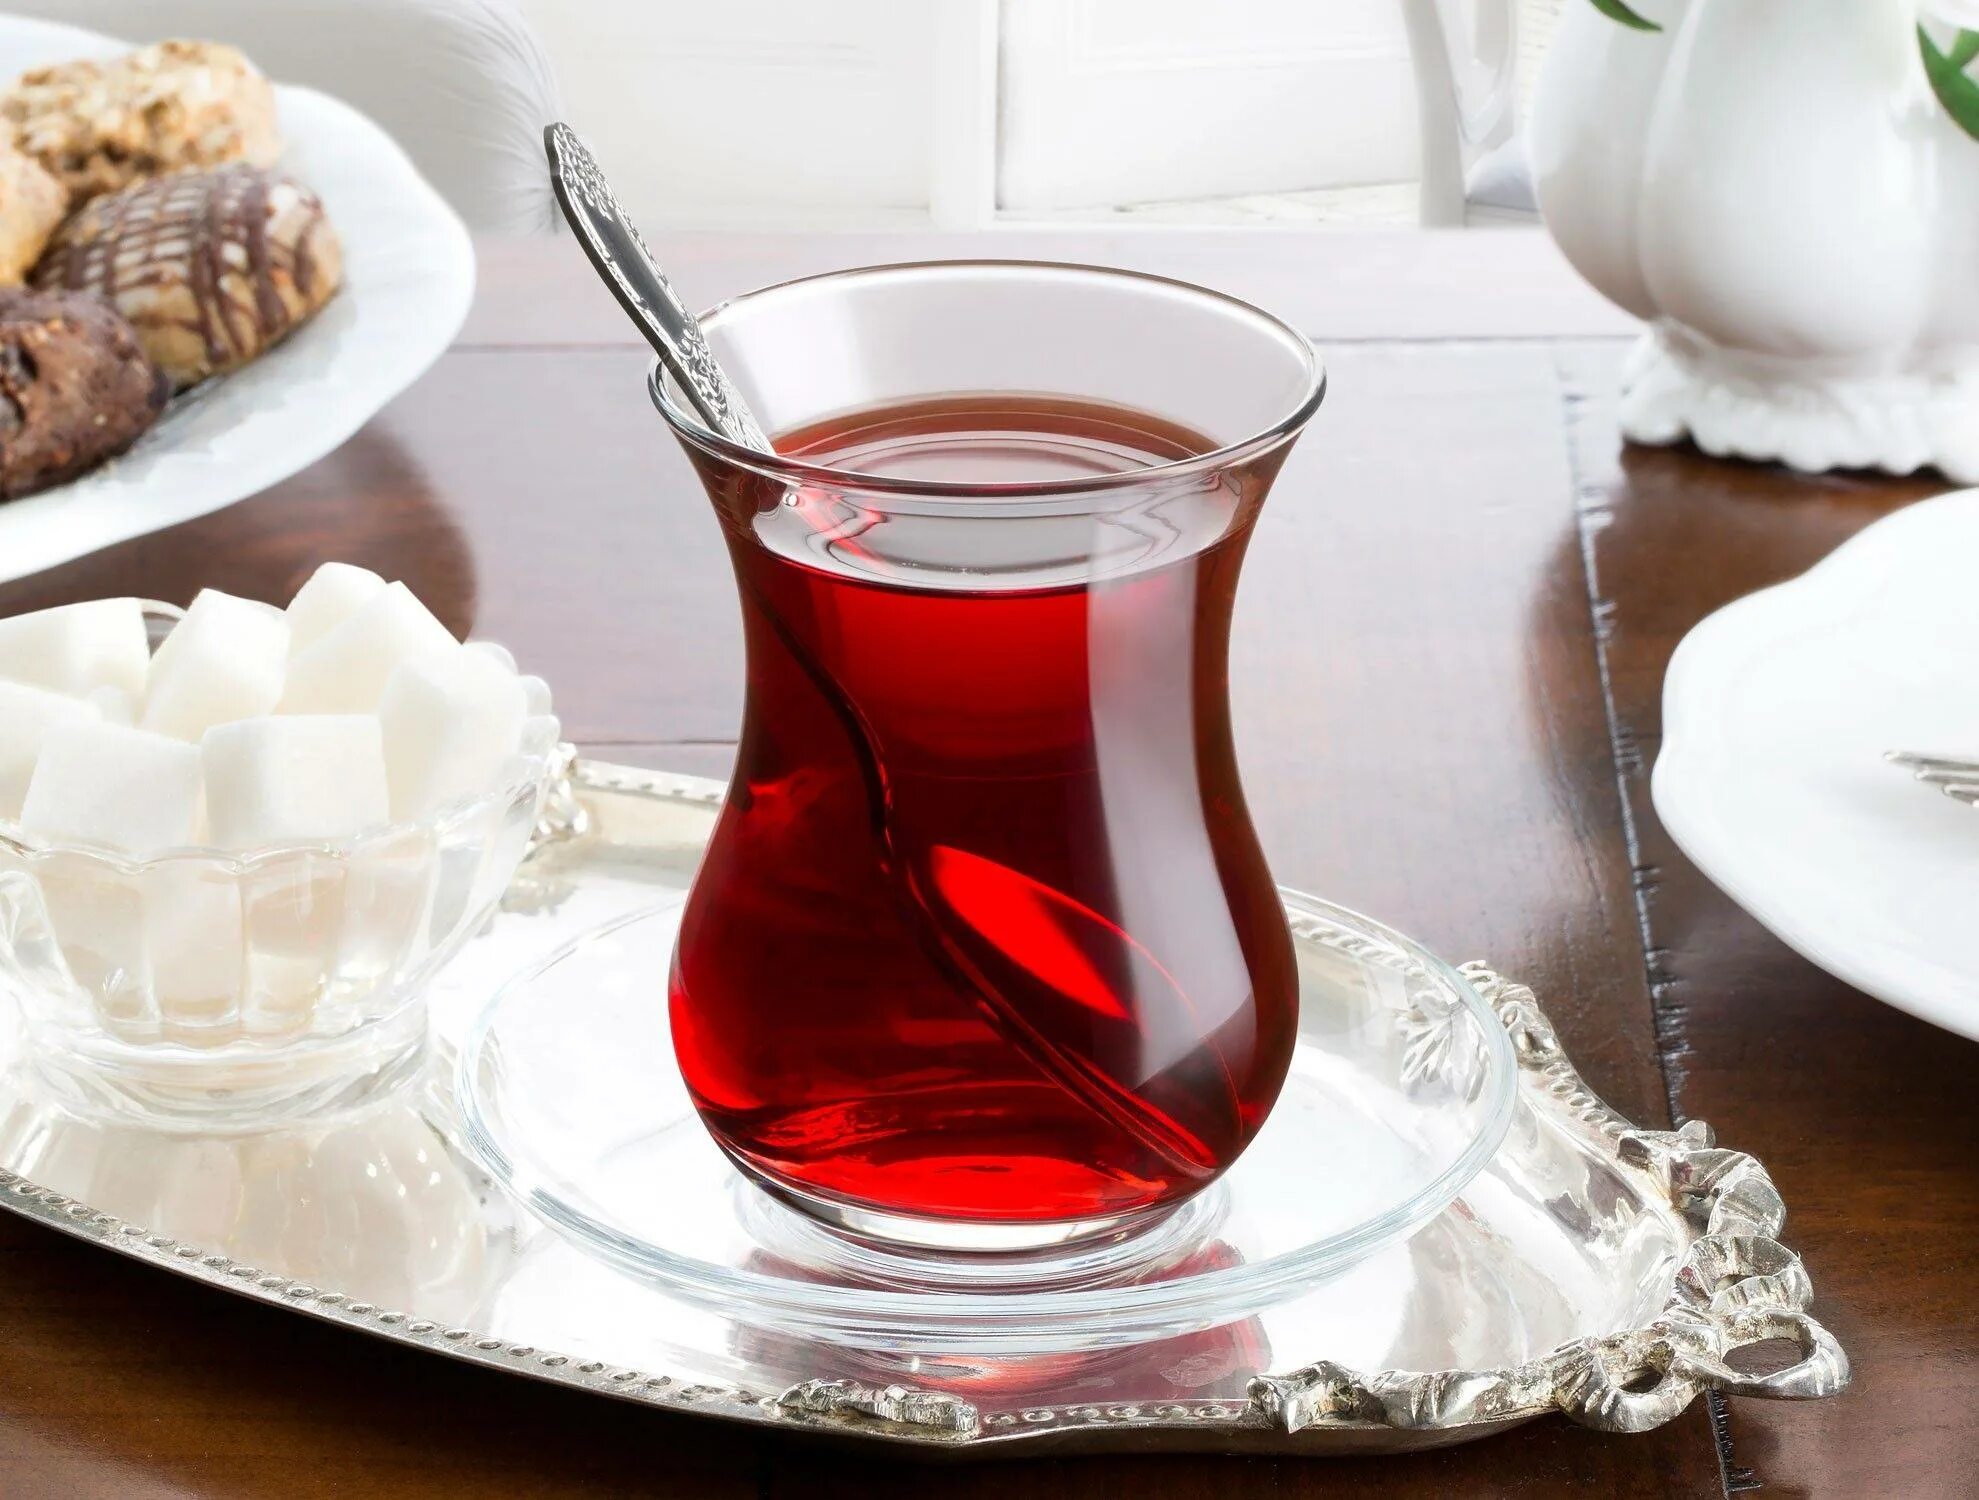 Pasabahce армуды с блюдцем. Армуду чай Азербайджан. Турецкие стаканы для чая. Чай в стакане. Азербайджанский стакан для чая